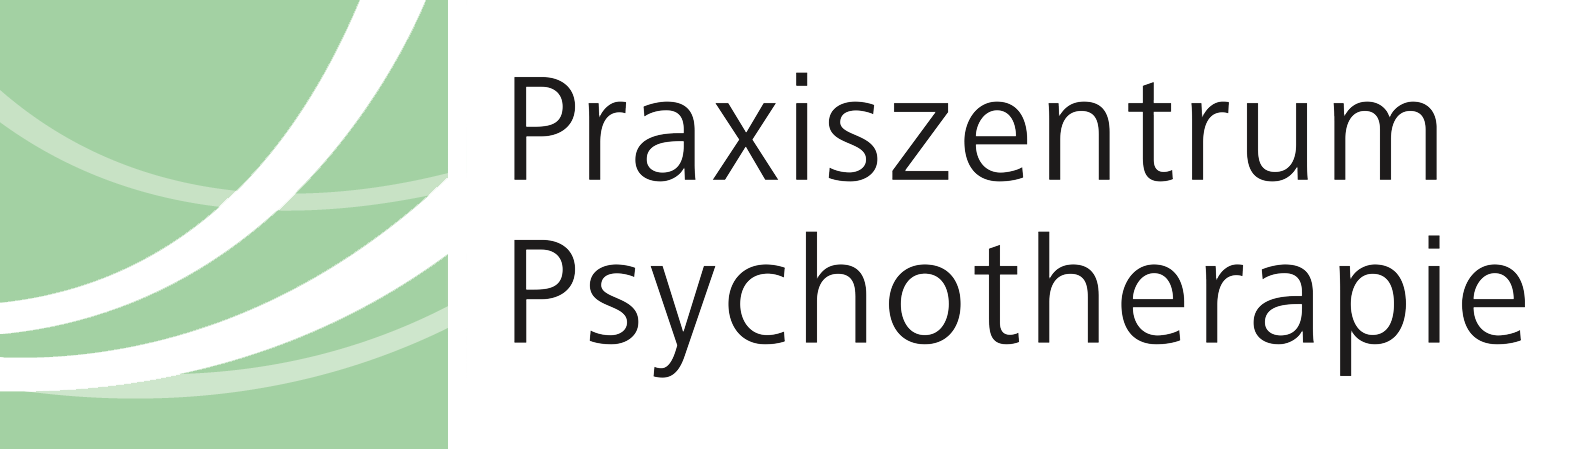 praxiszentrum-psychotherapie-l.png